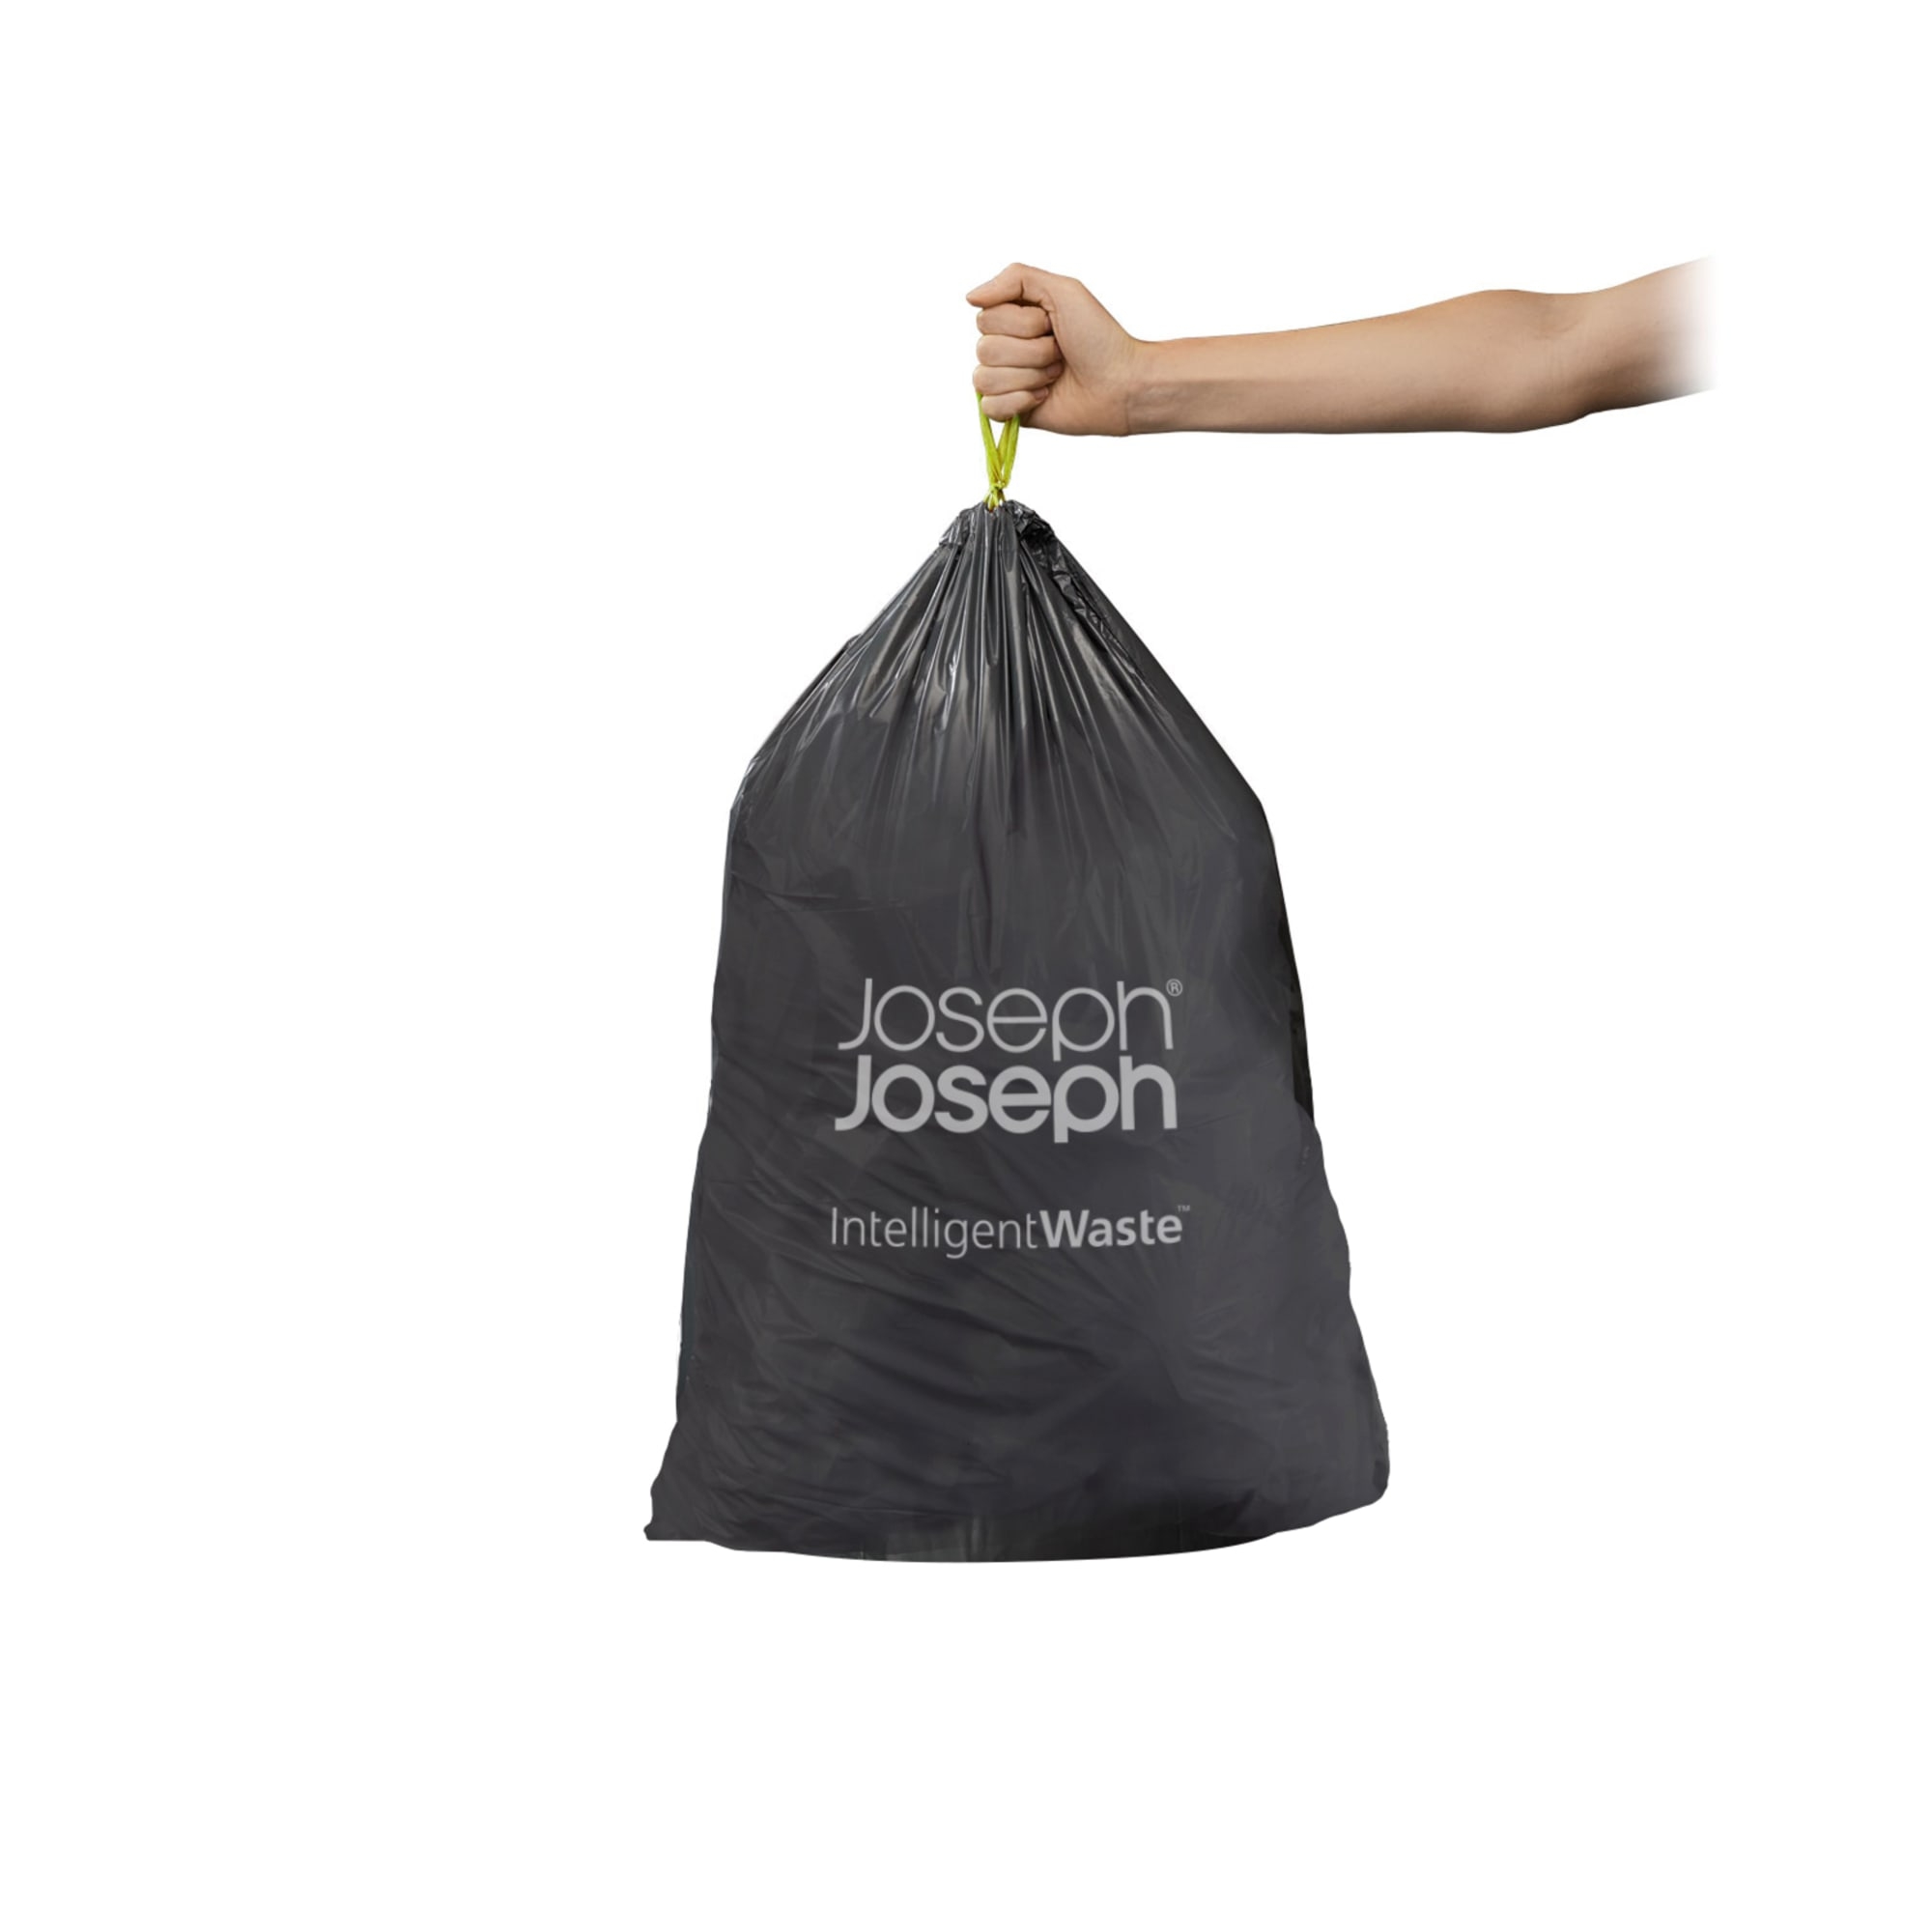 Joseph Joseph Intelligent Waste General Waste Bag 20pk Image 2